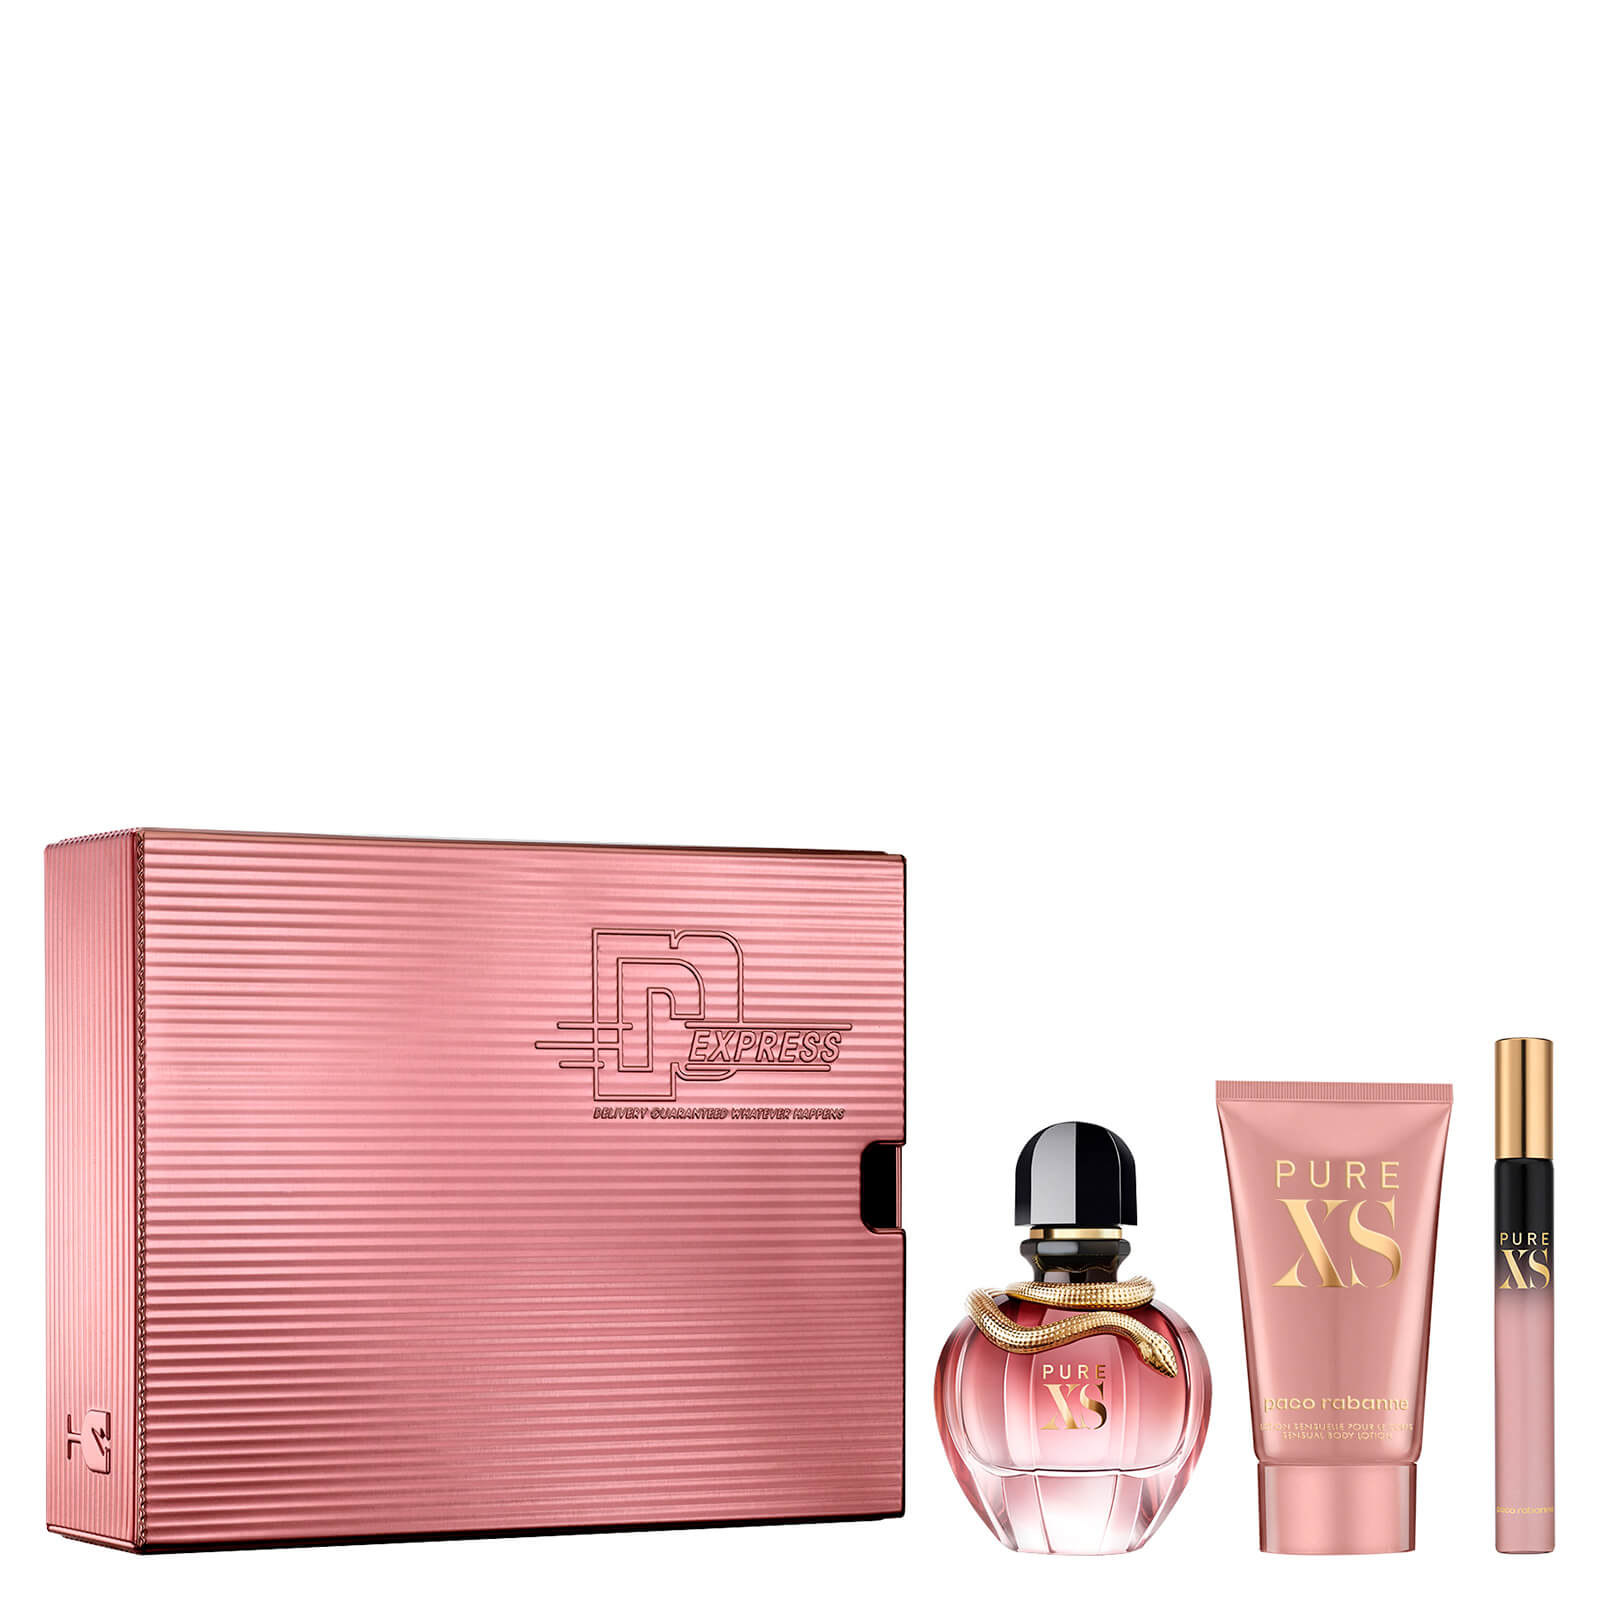 Paco Rabanne 2019 Pure XS for Her Eau De Parfum 50ml Gift Set